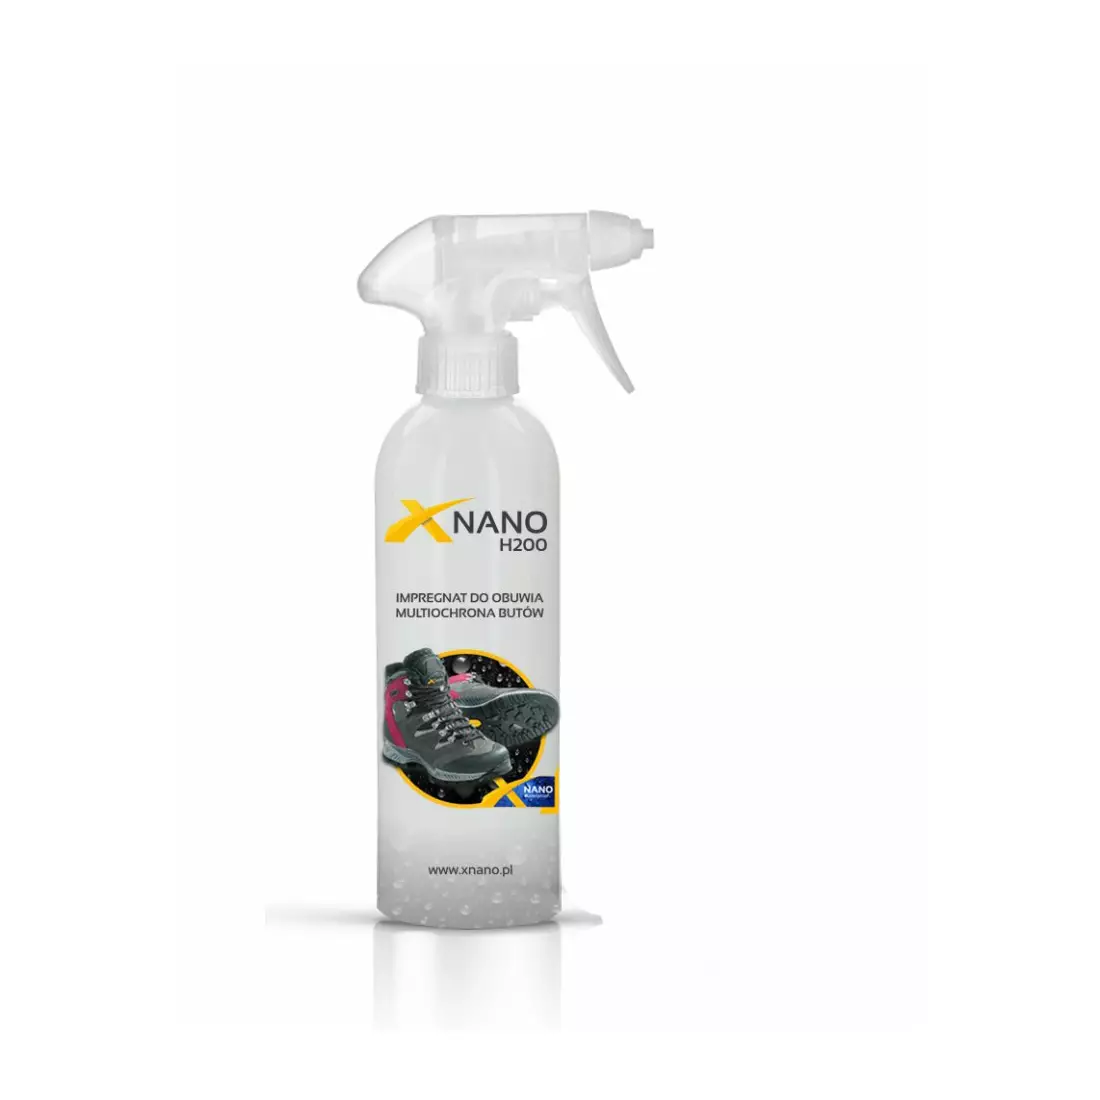 NANOBIZ - XNANO - H200 Multi-protective impregnation for shoes, capacity: 250 ml